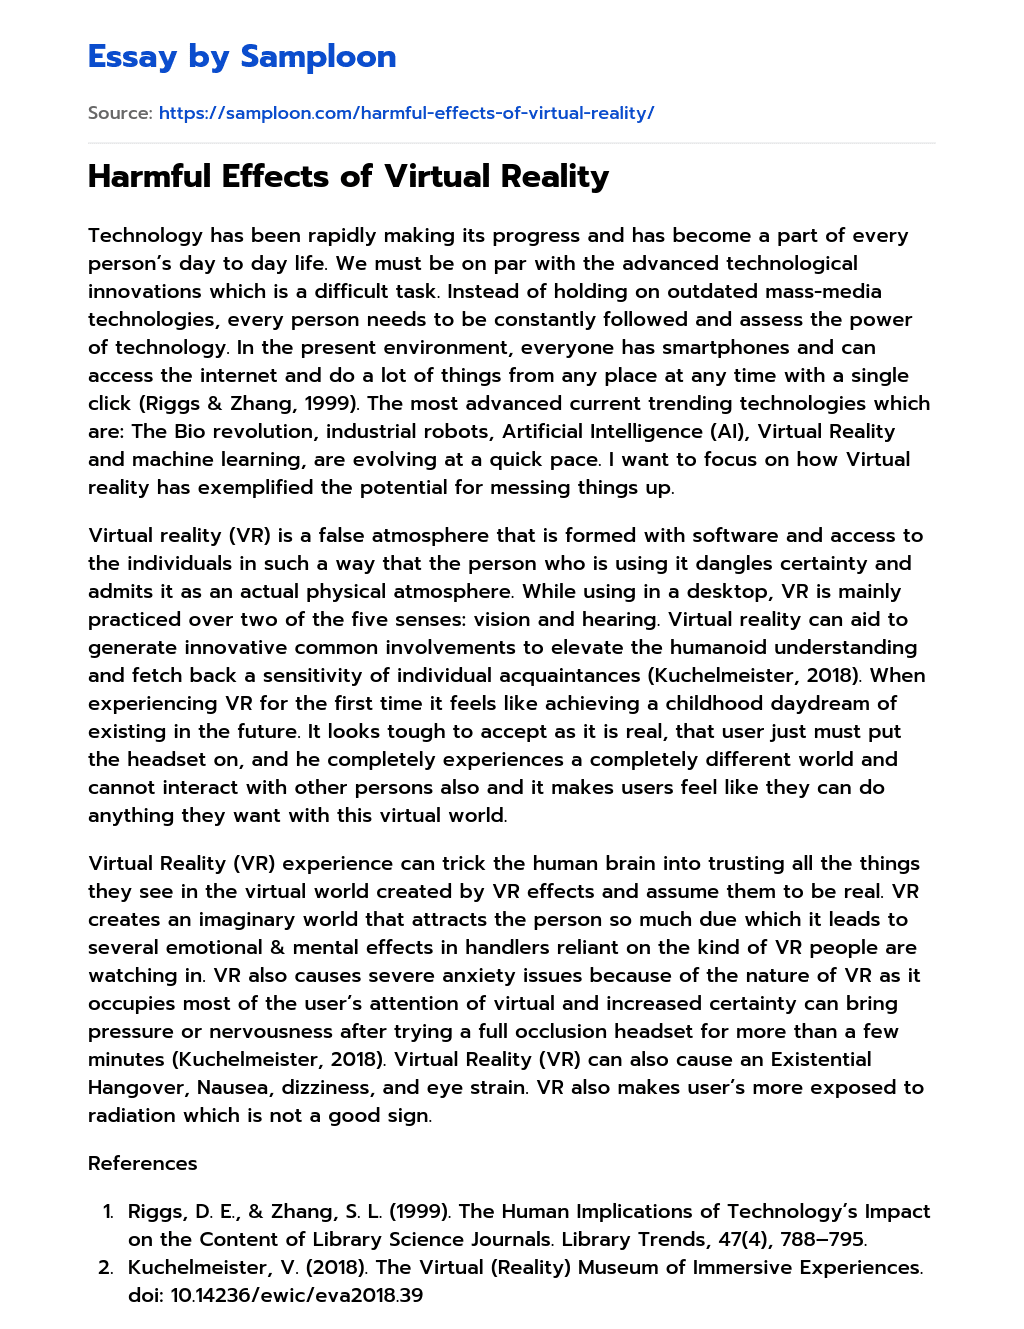 essay topics about virtual reality